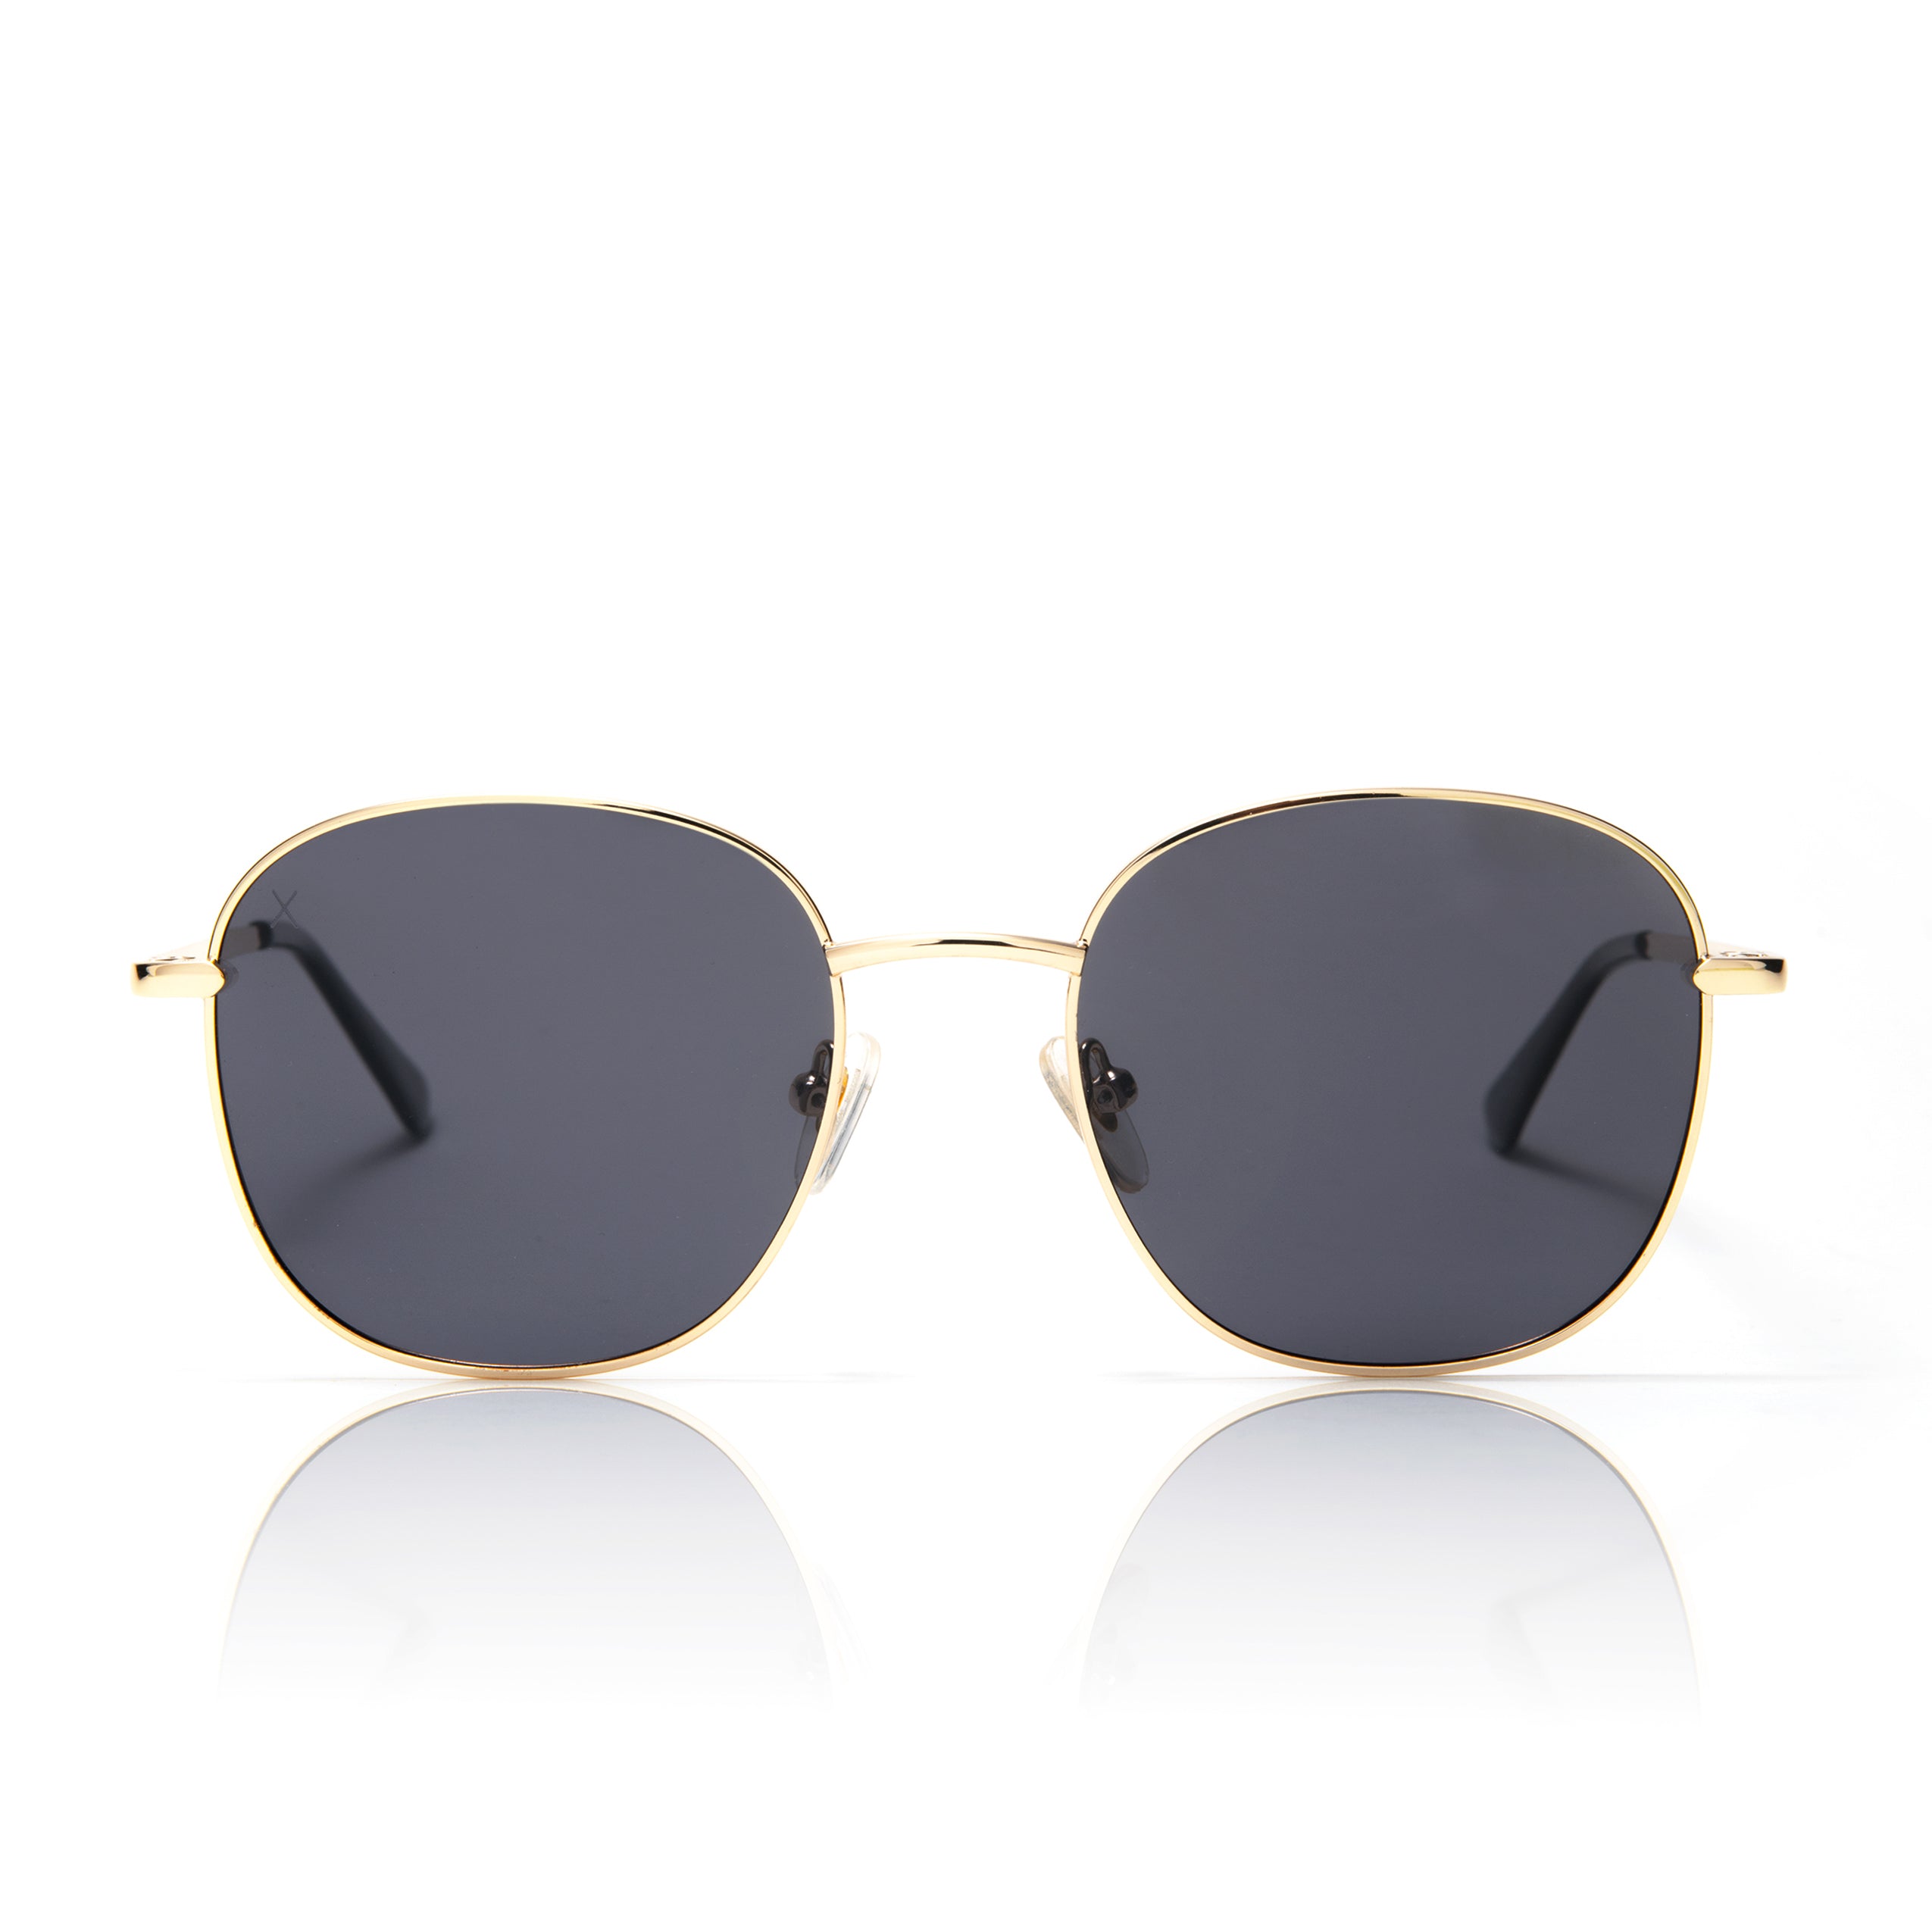 avalon - gold + grey sunglasses